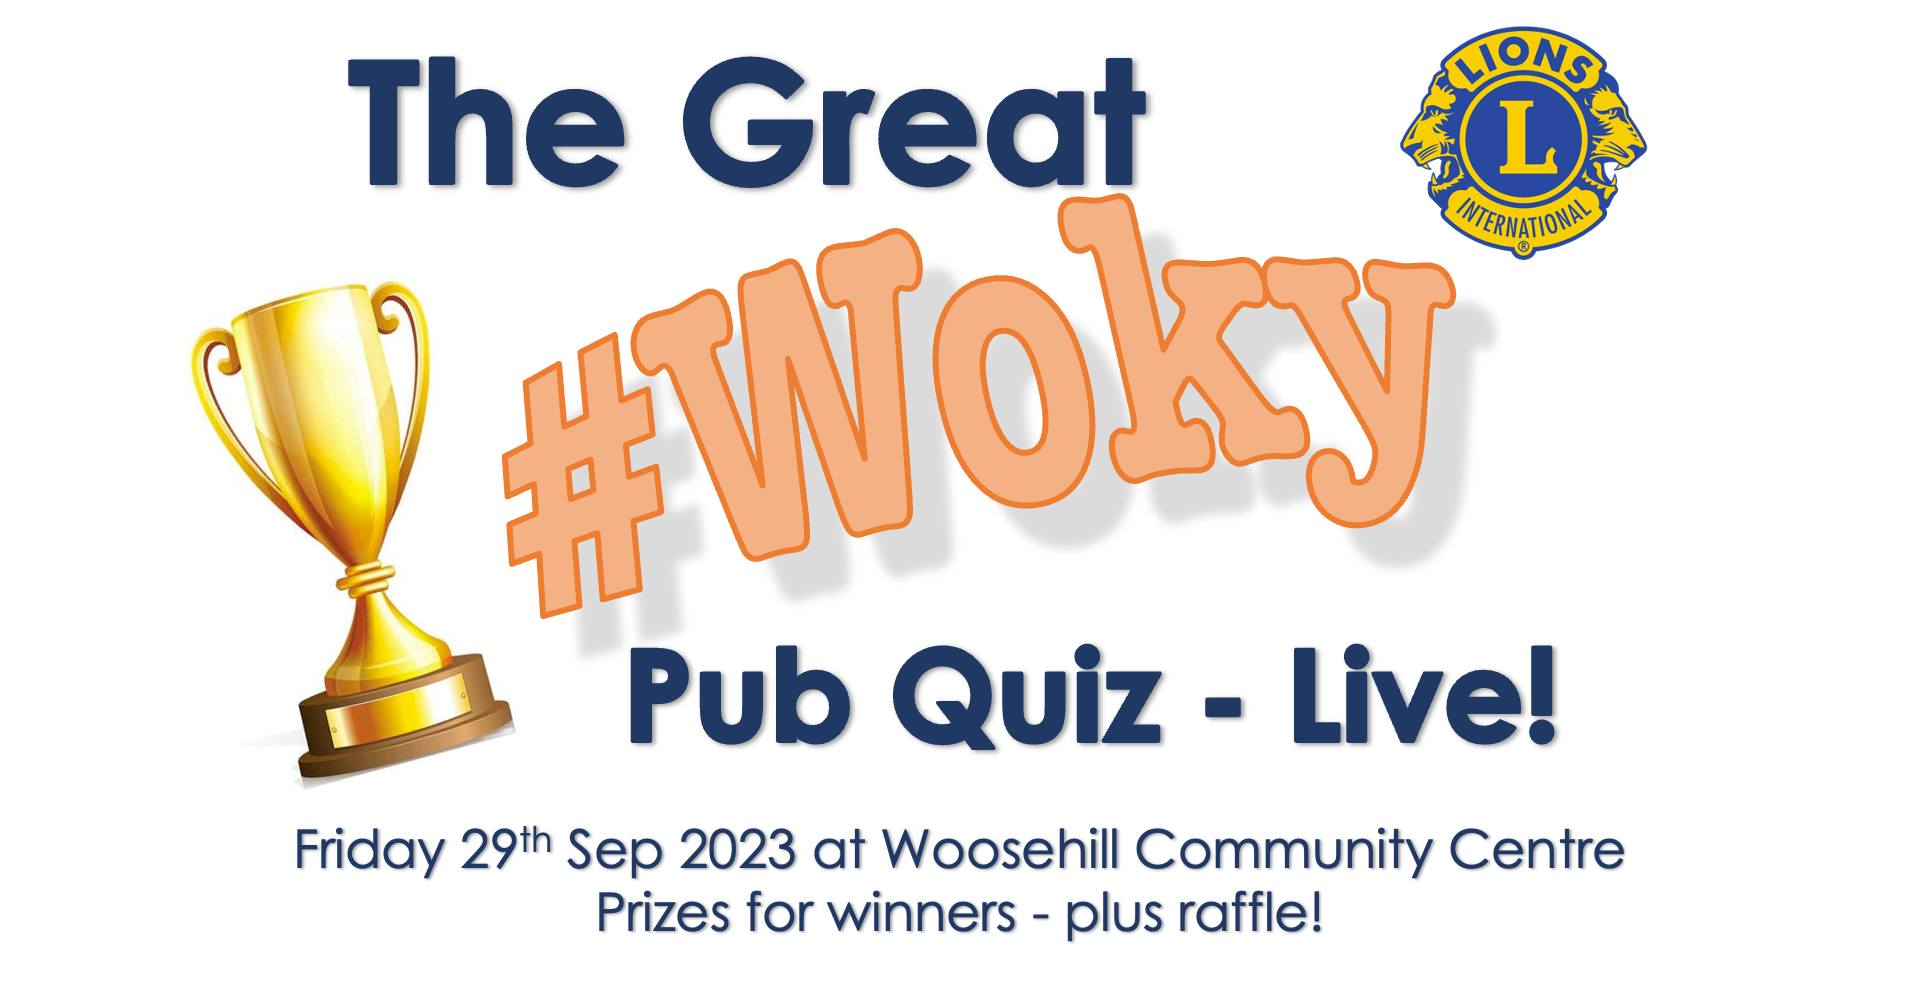 The Great #Woky Pub Quiz Live!